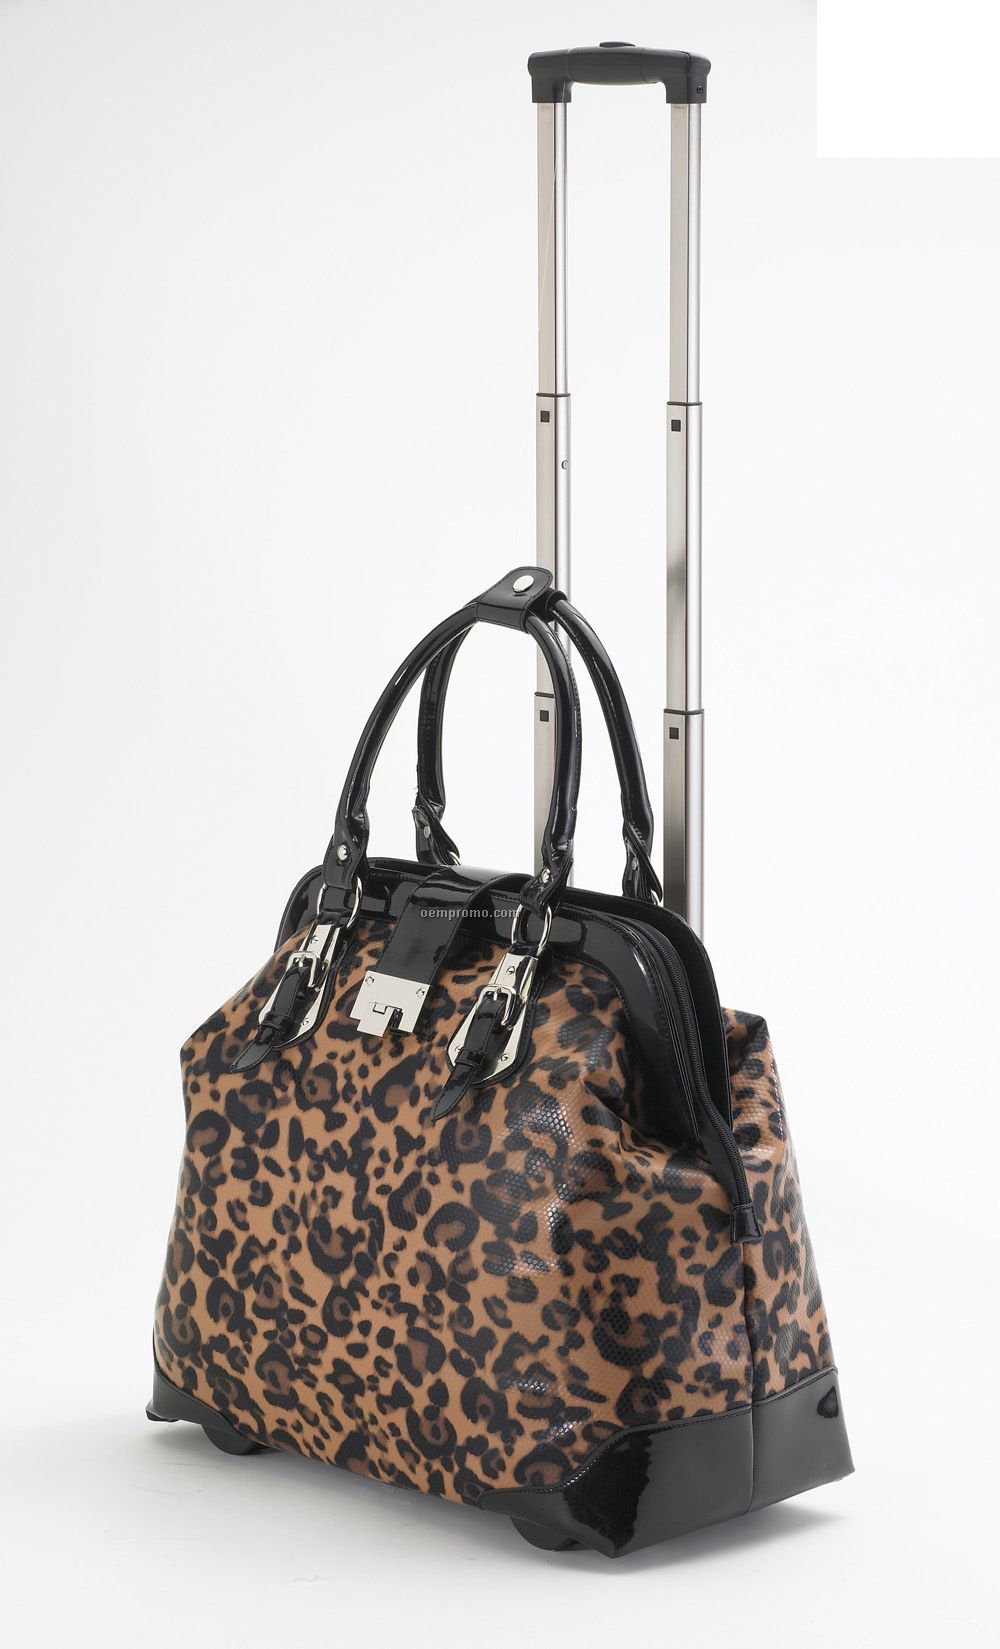 Rolling Tote Bag - Leopard Pattern